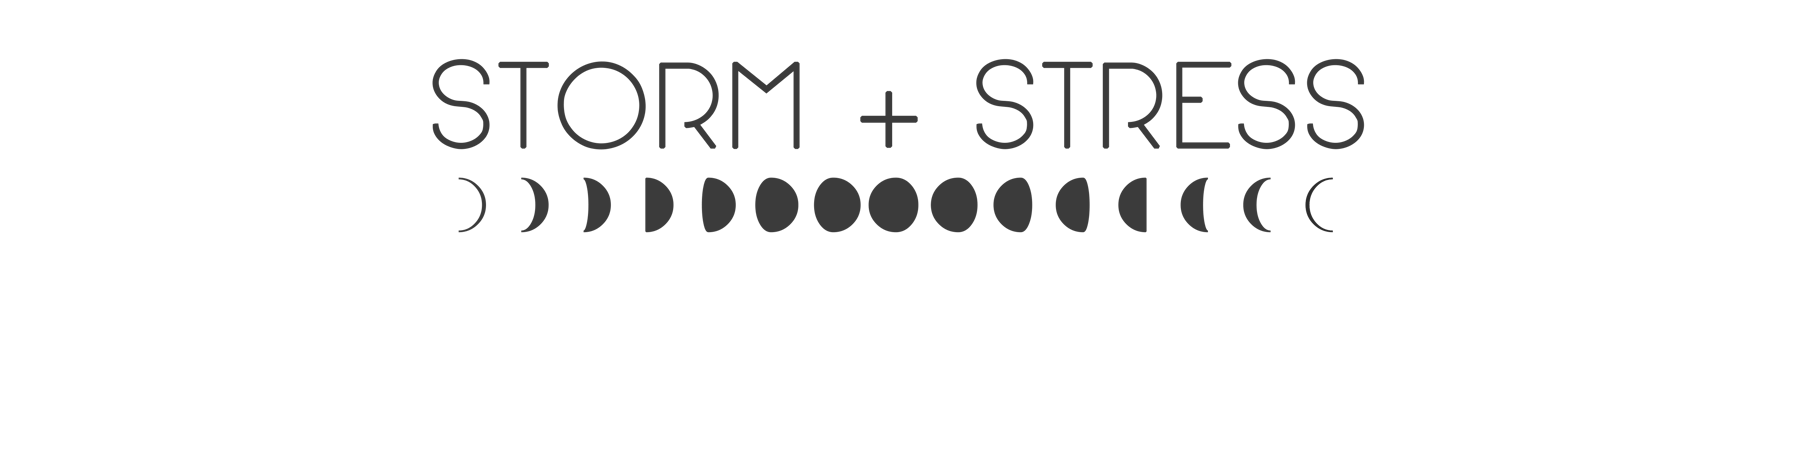 STORM + STRESS handmade bohemian jewelry